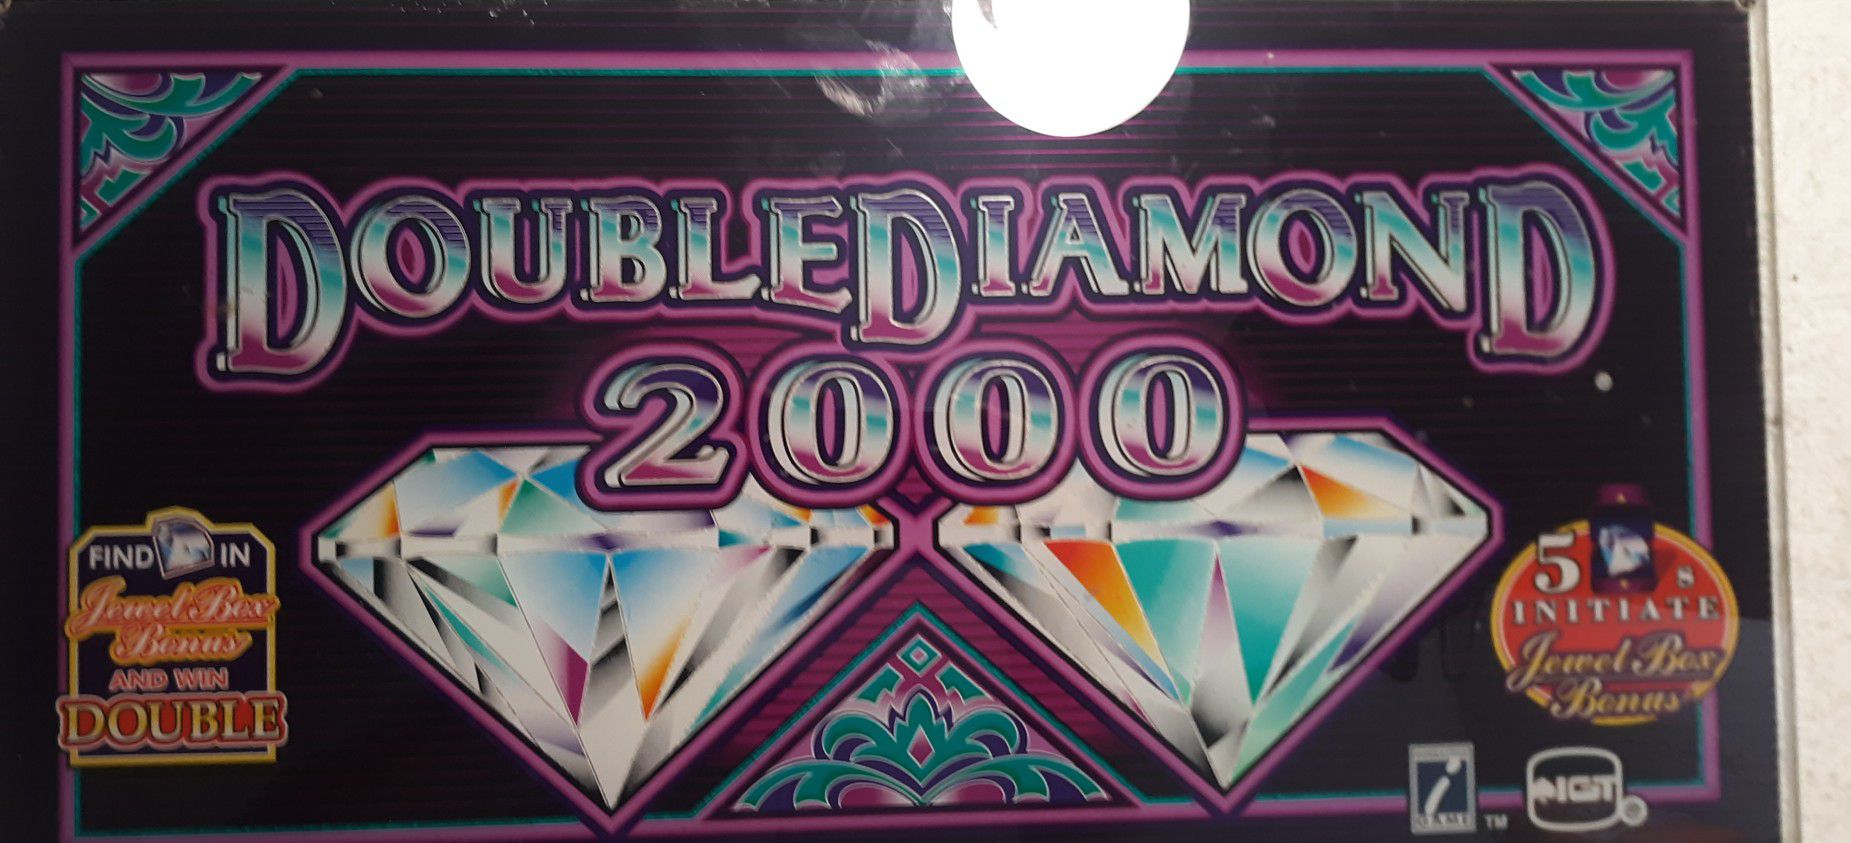 Diamond 2000 collection slot machine glass